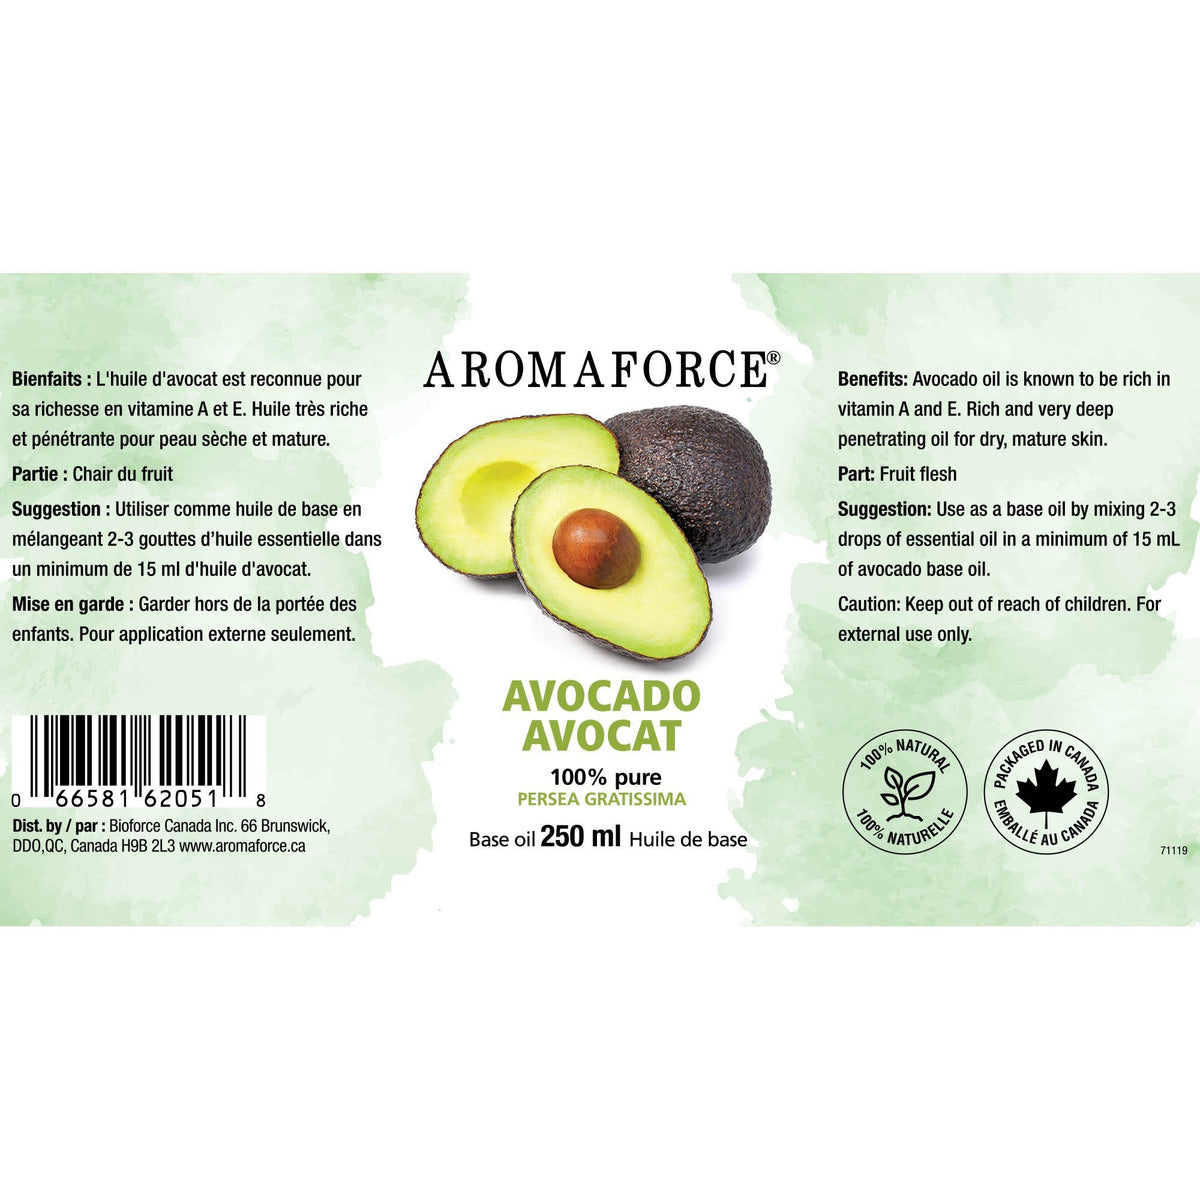 Aromaforce Avocado Oil 250mL - A.Vogel Canada